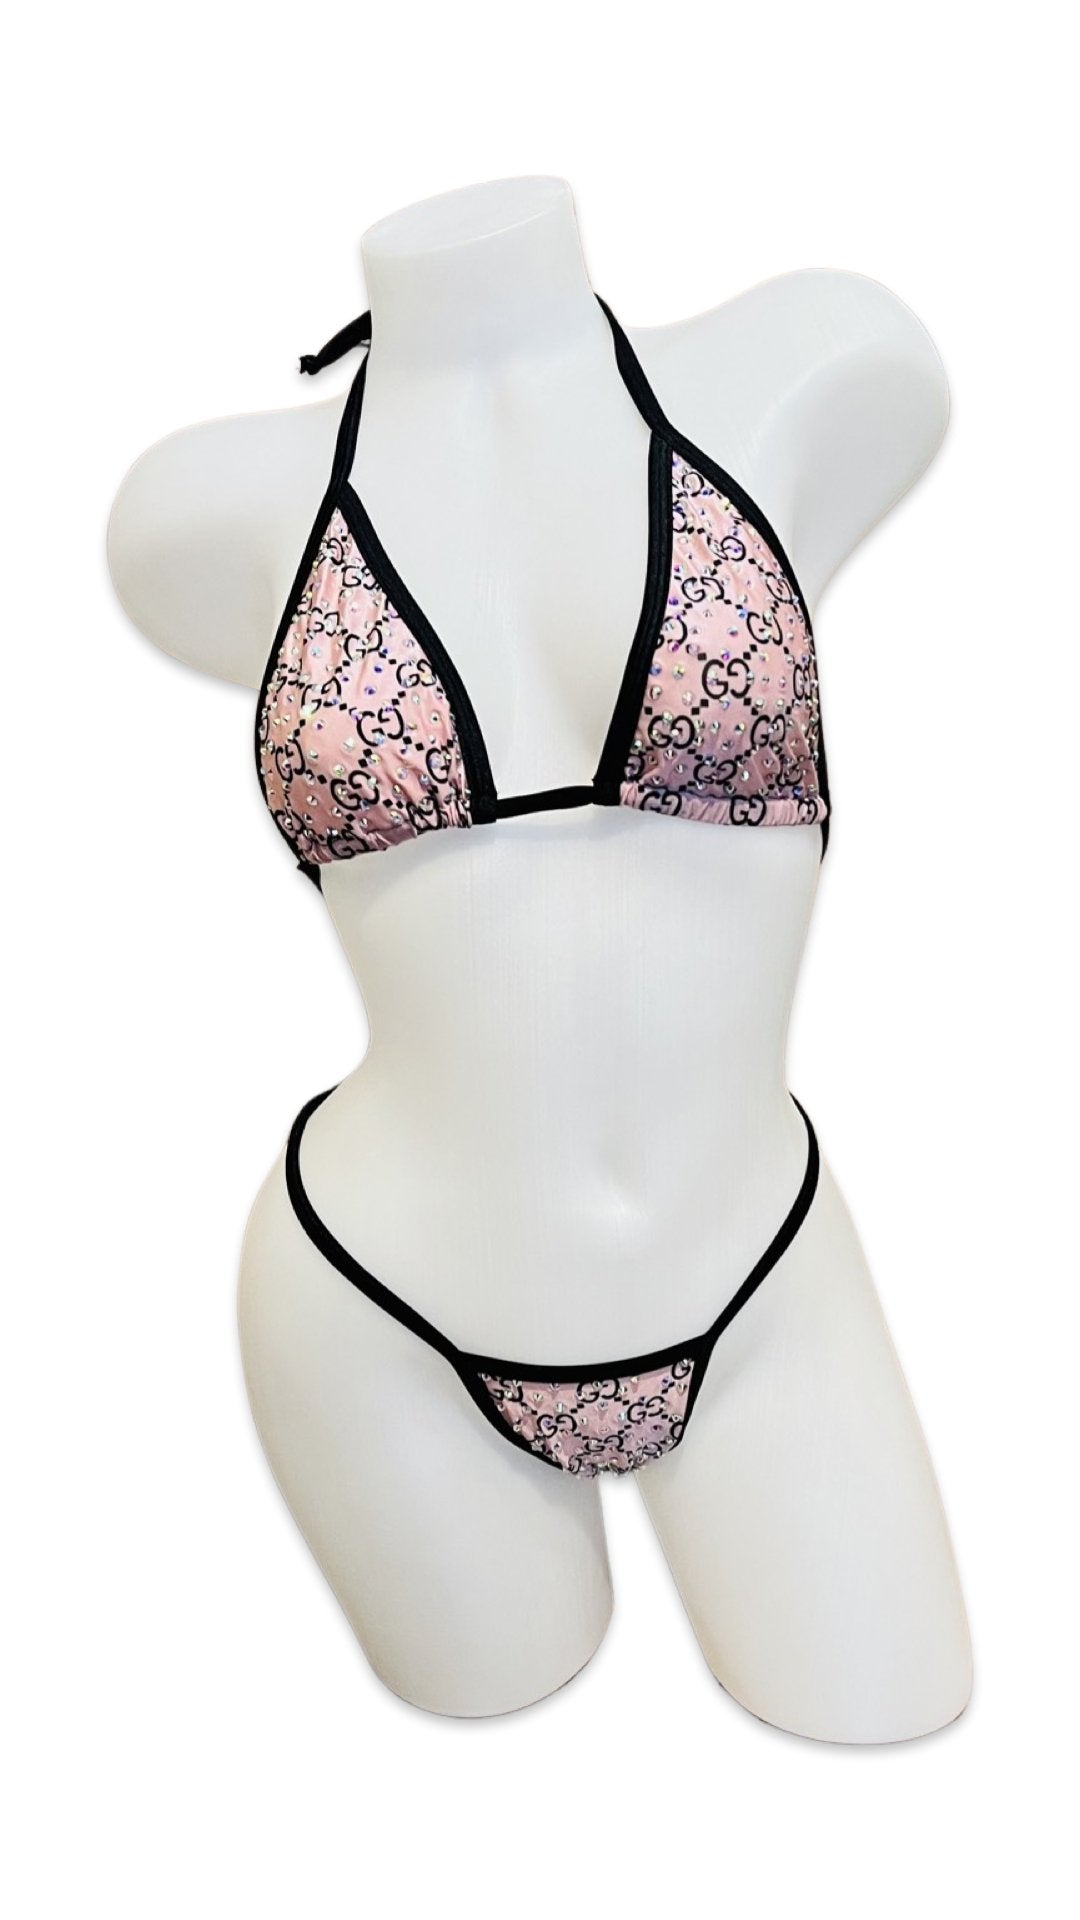 Rhinestone Bikini Design Pink/Black - Model Express VancouverBikini